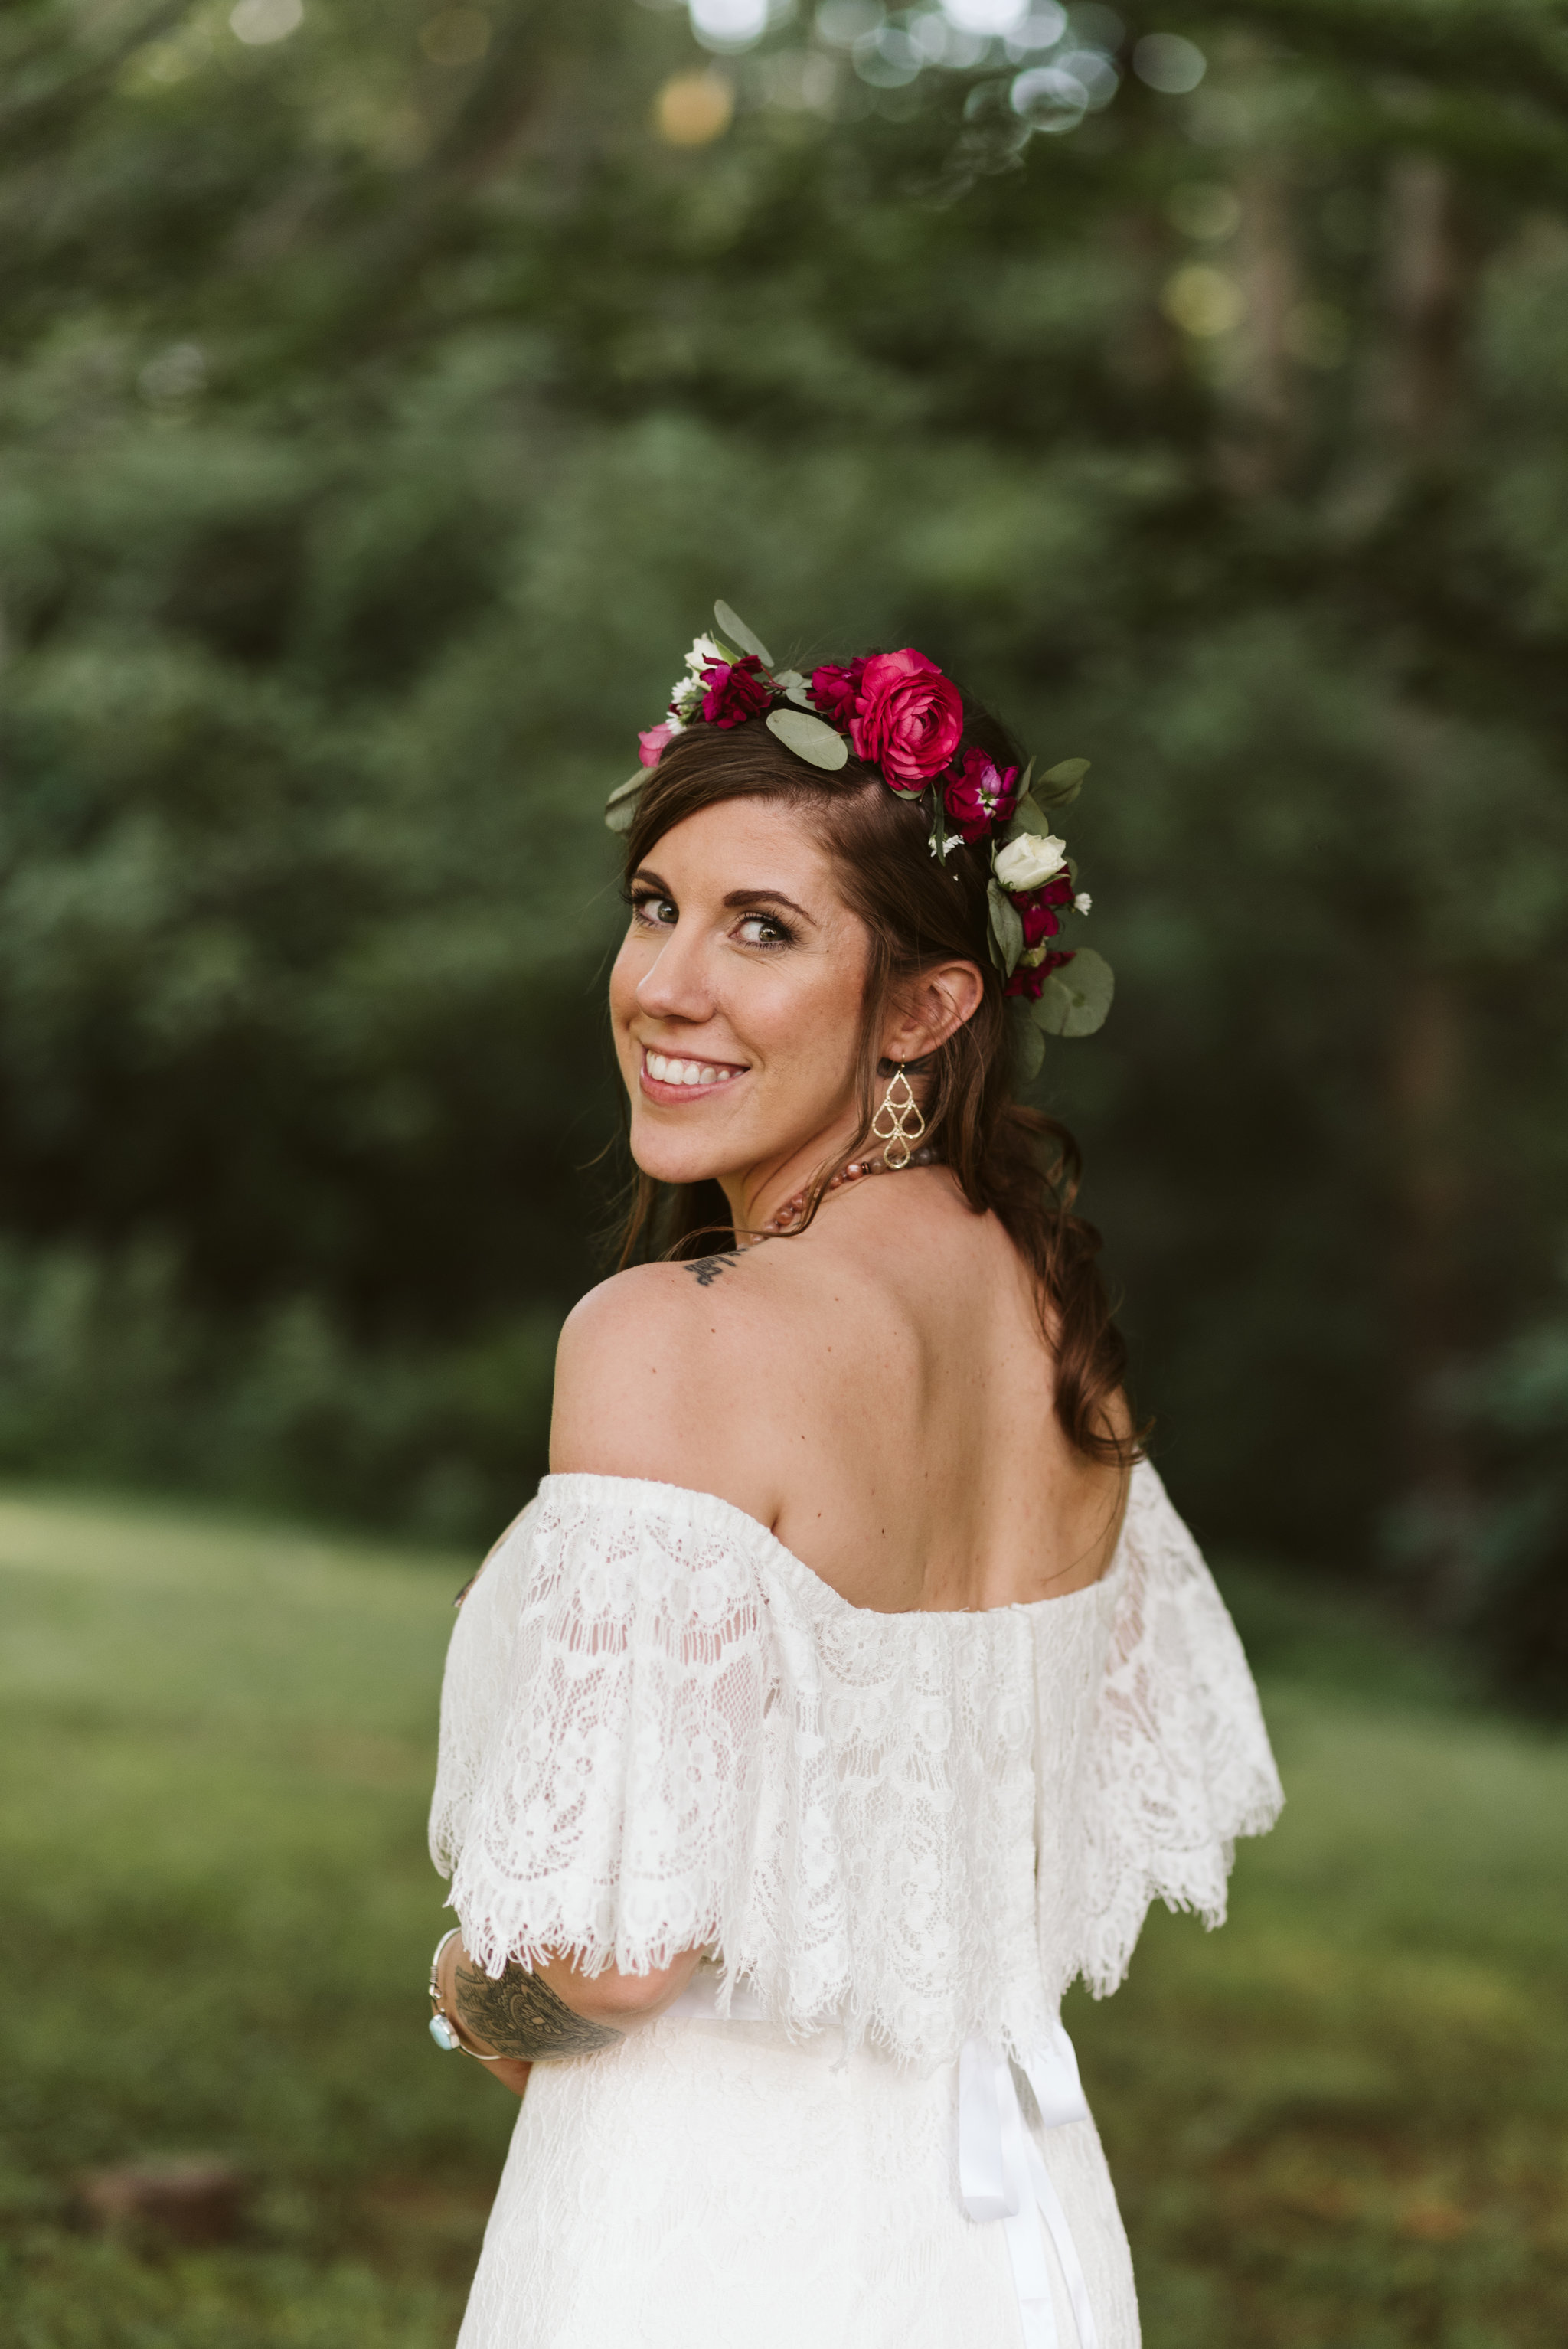  Annapolis, Quaker Wedding, Maryland Wedding Photographer, Intimate, Small Wedding, Vintage, DIY, Portrait of Bride Looking Over Shoulder, Flower Crown, Pink Peony 